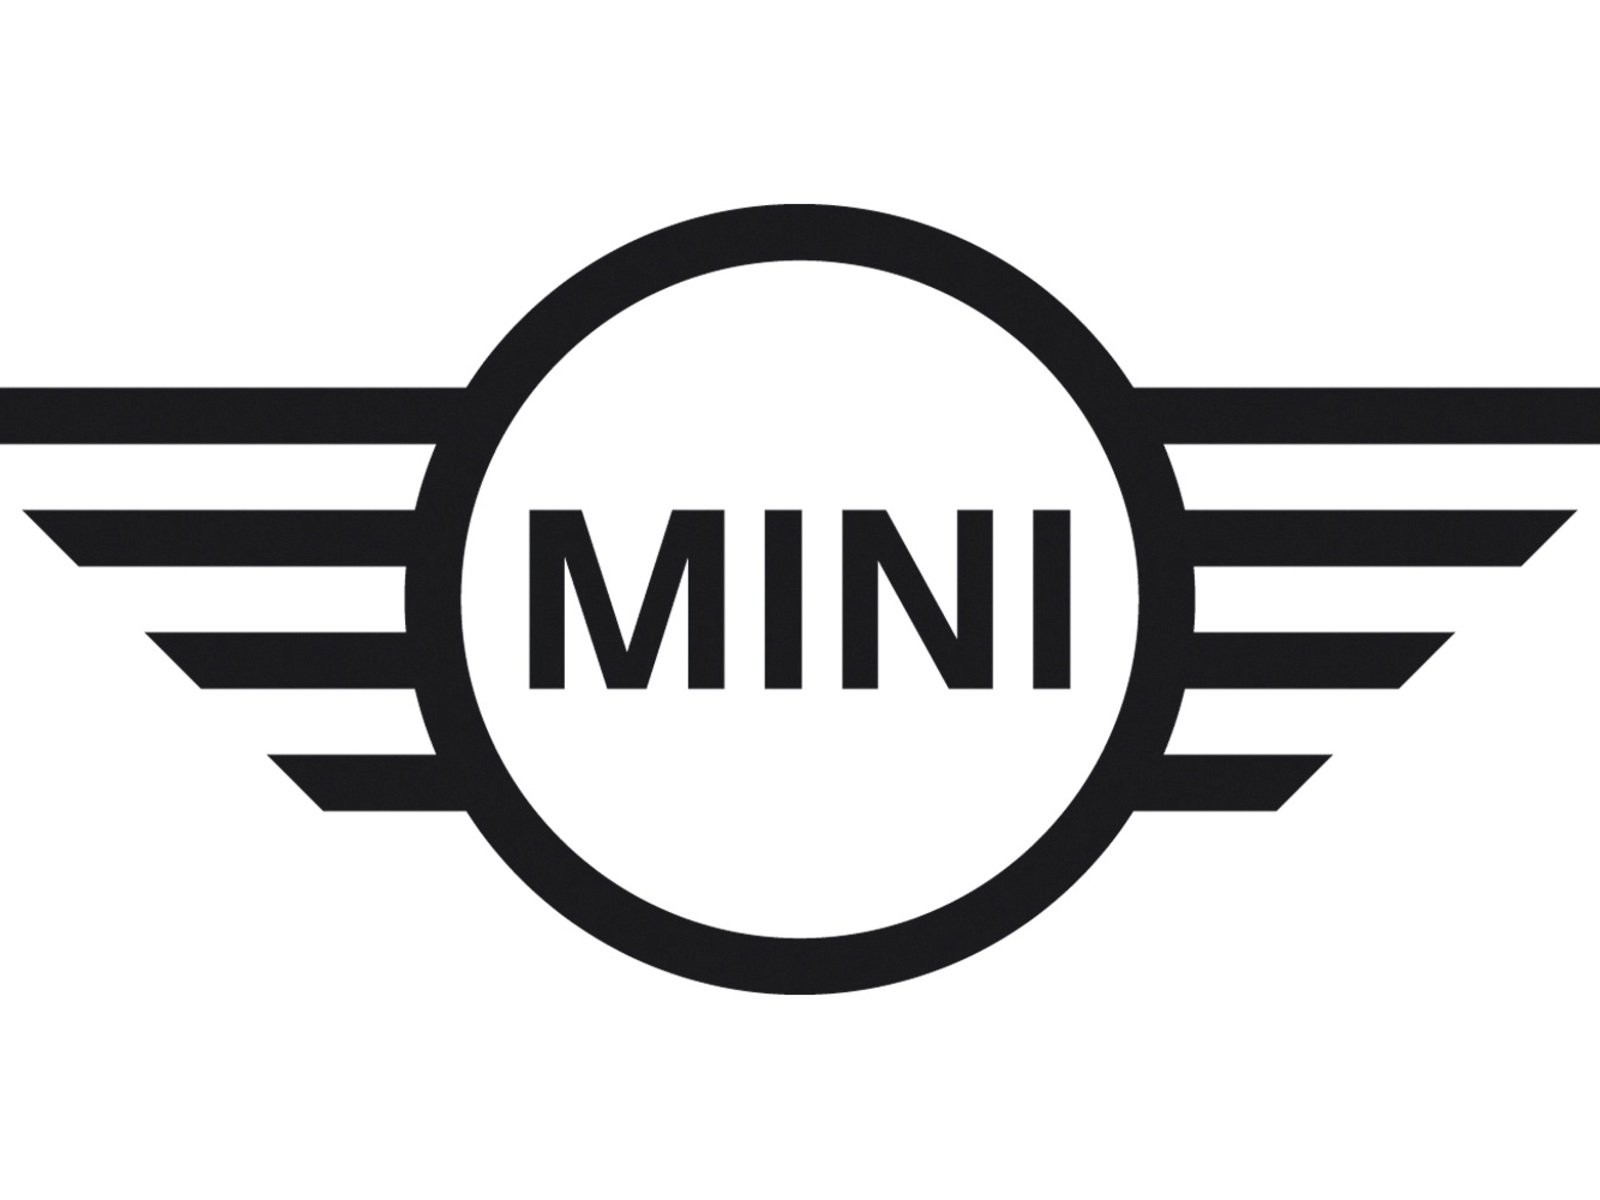 mini logo 2018